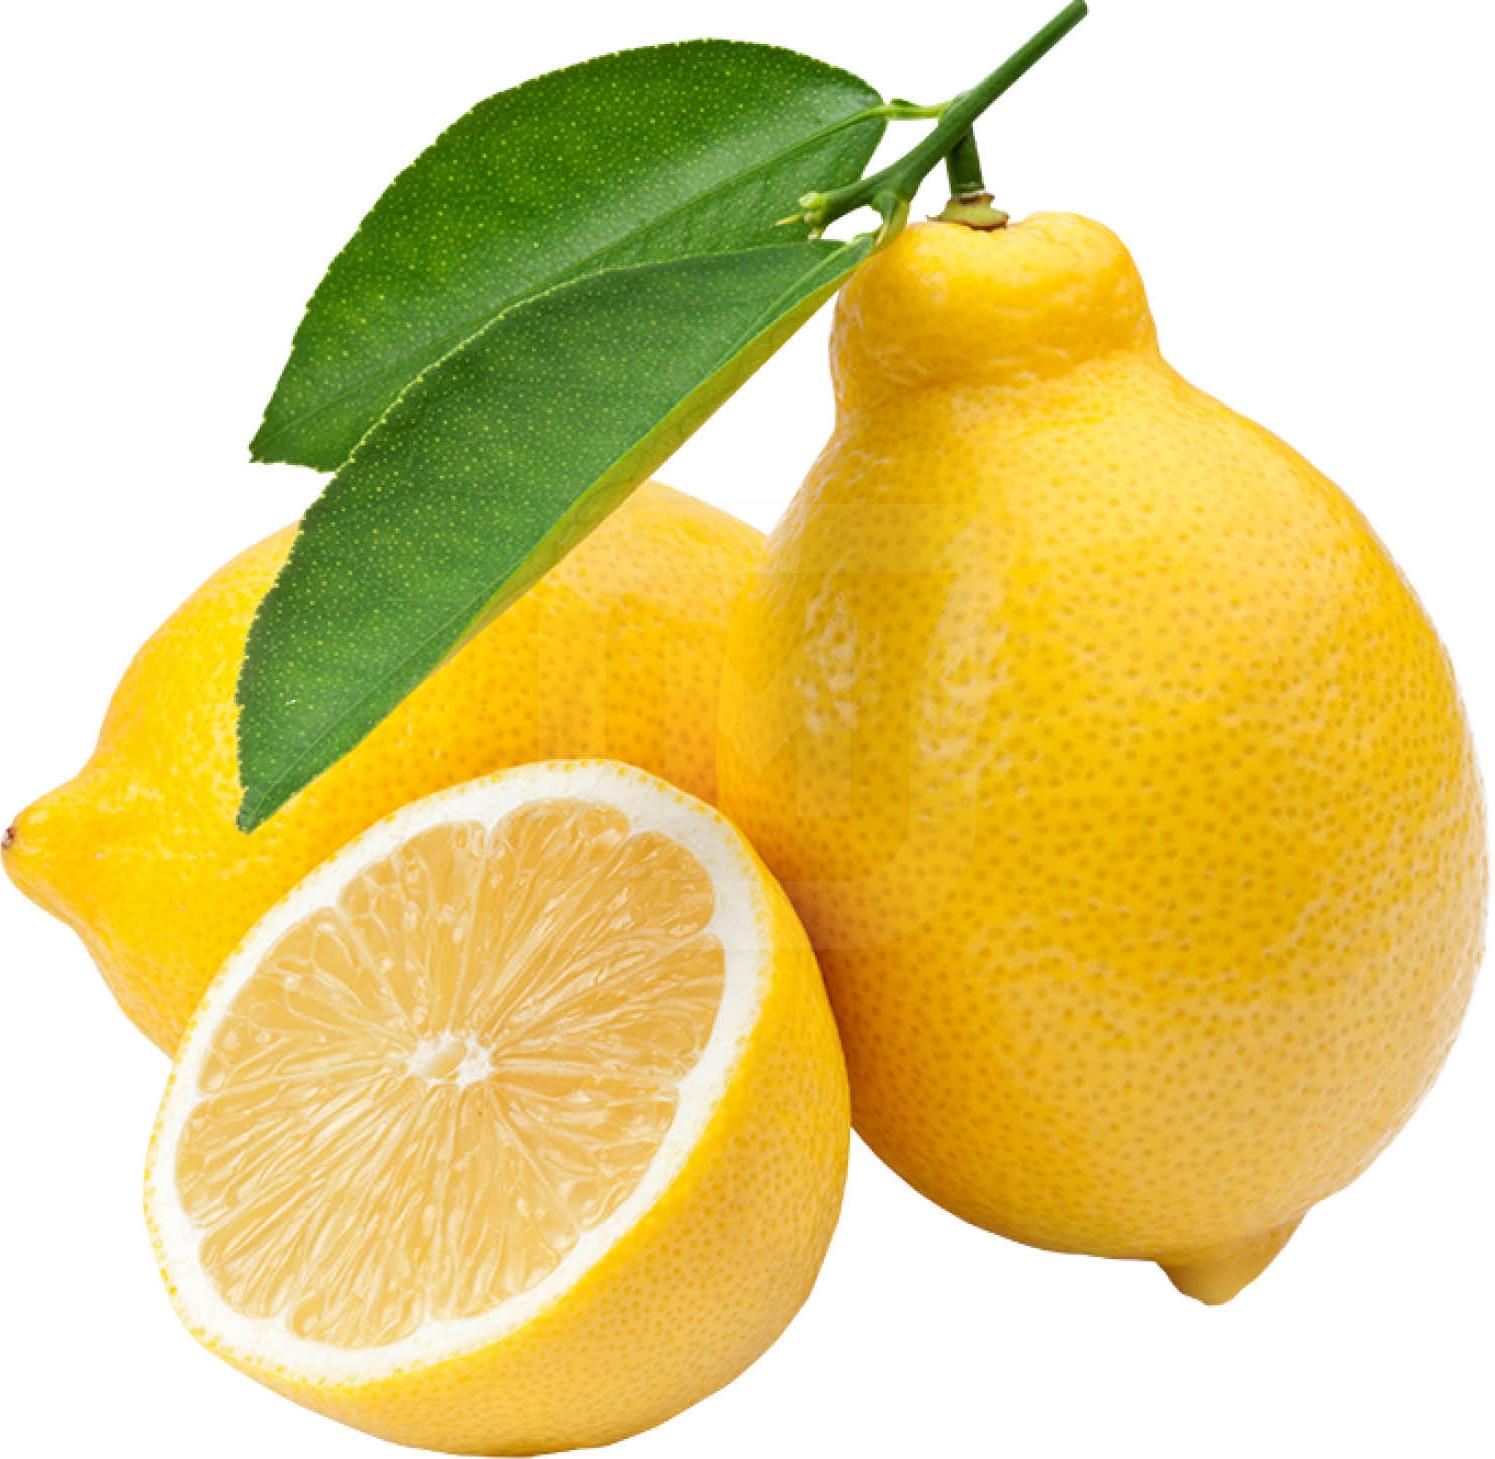 Свежесть лимона. Лимон Турция. Лимон Ламас турецкий. Лимон на белом фоне. Лимон один.